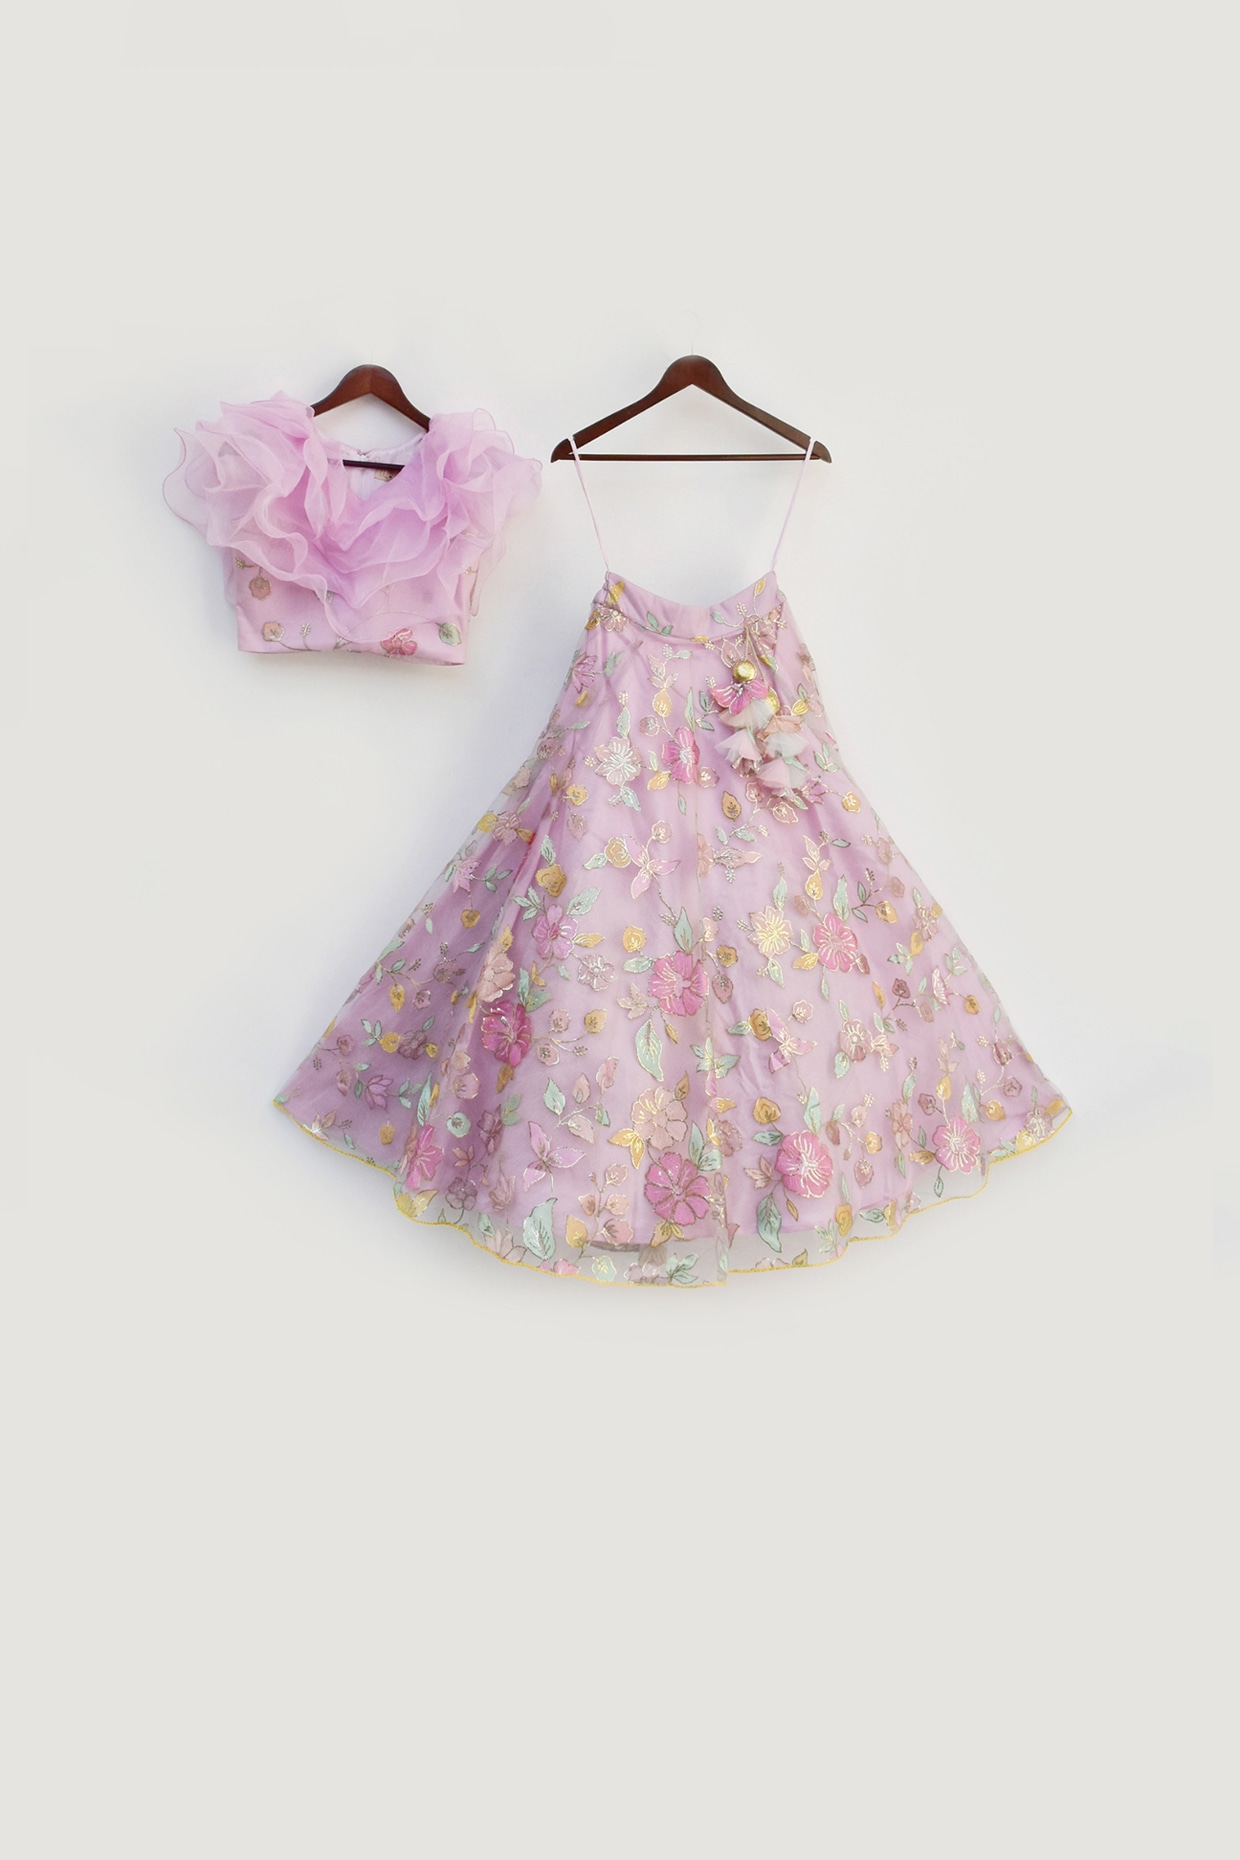 Buy Full Sets Ethnic Wear Pure Pink Floral Print Girls Lehenga Set Clothing  for Girl Jollee